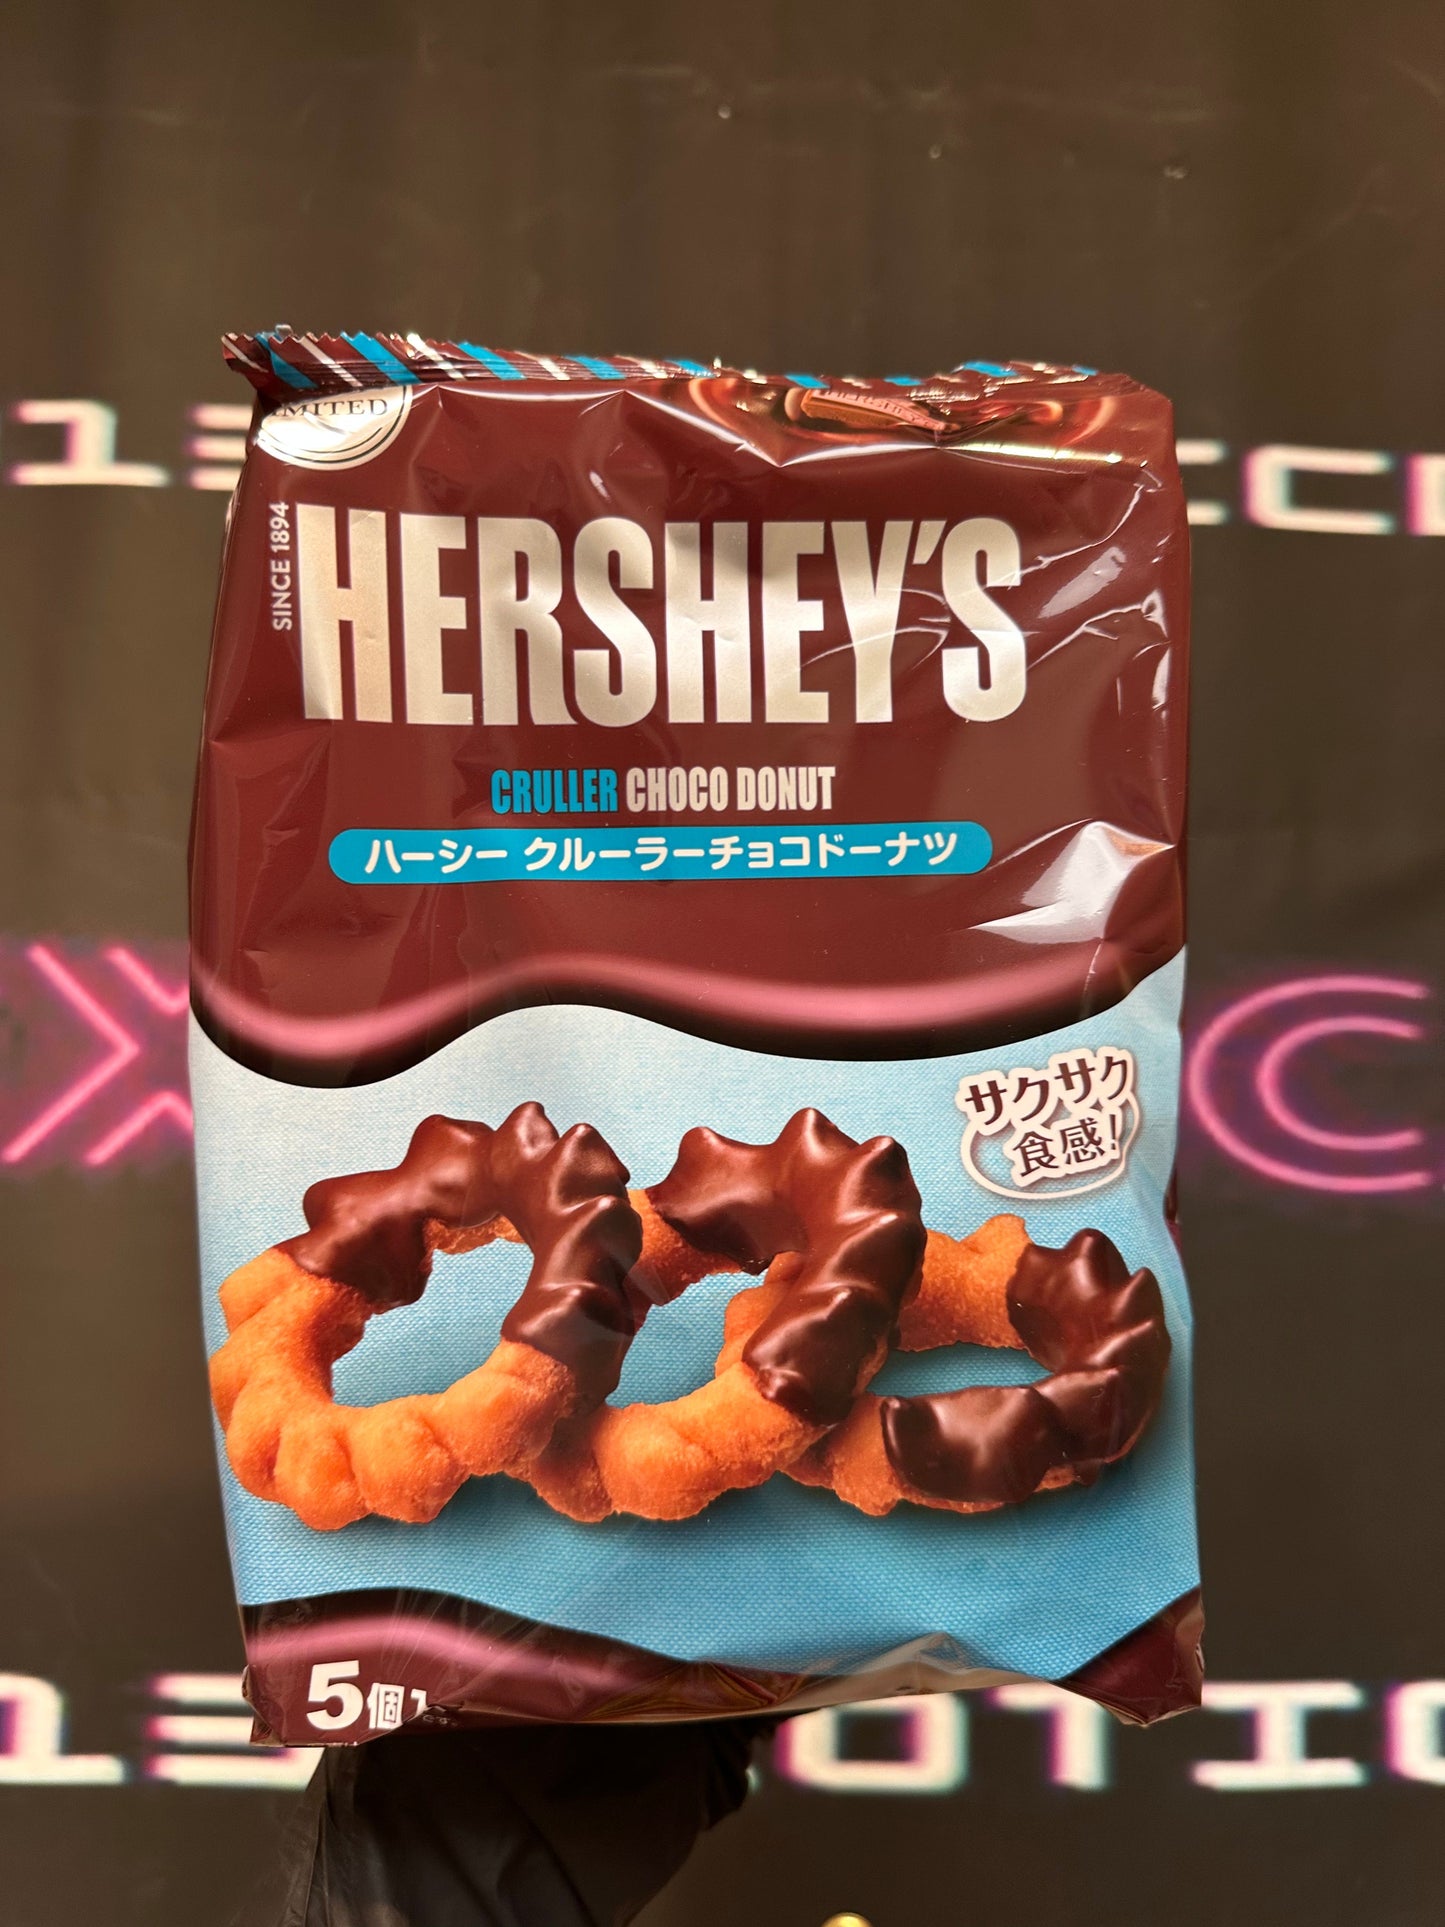 Hershey’s Cruller Choco Donut Case